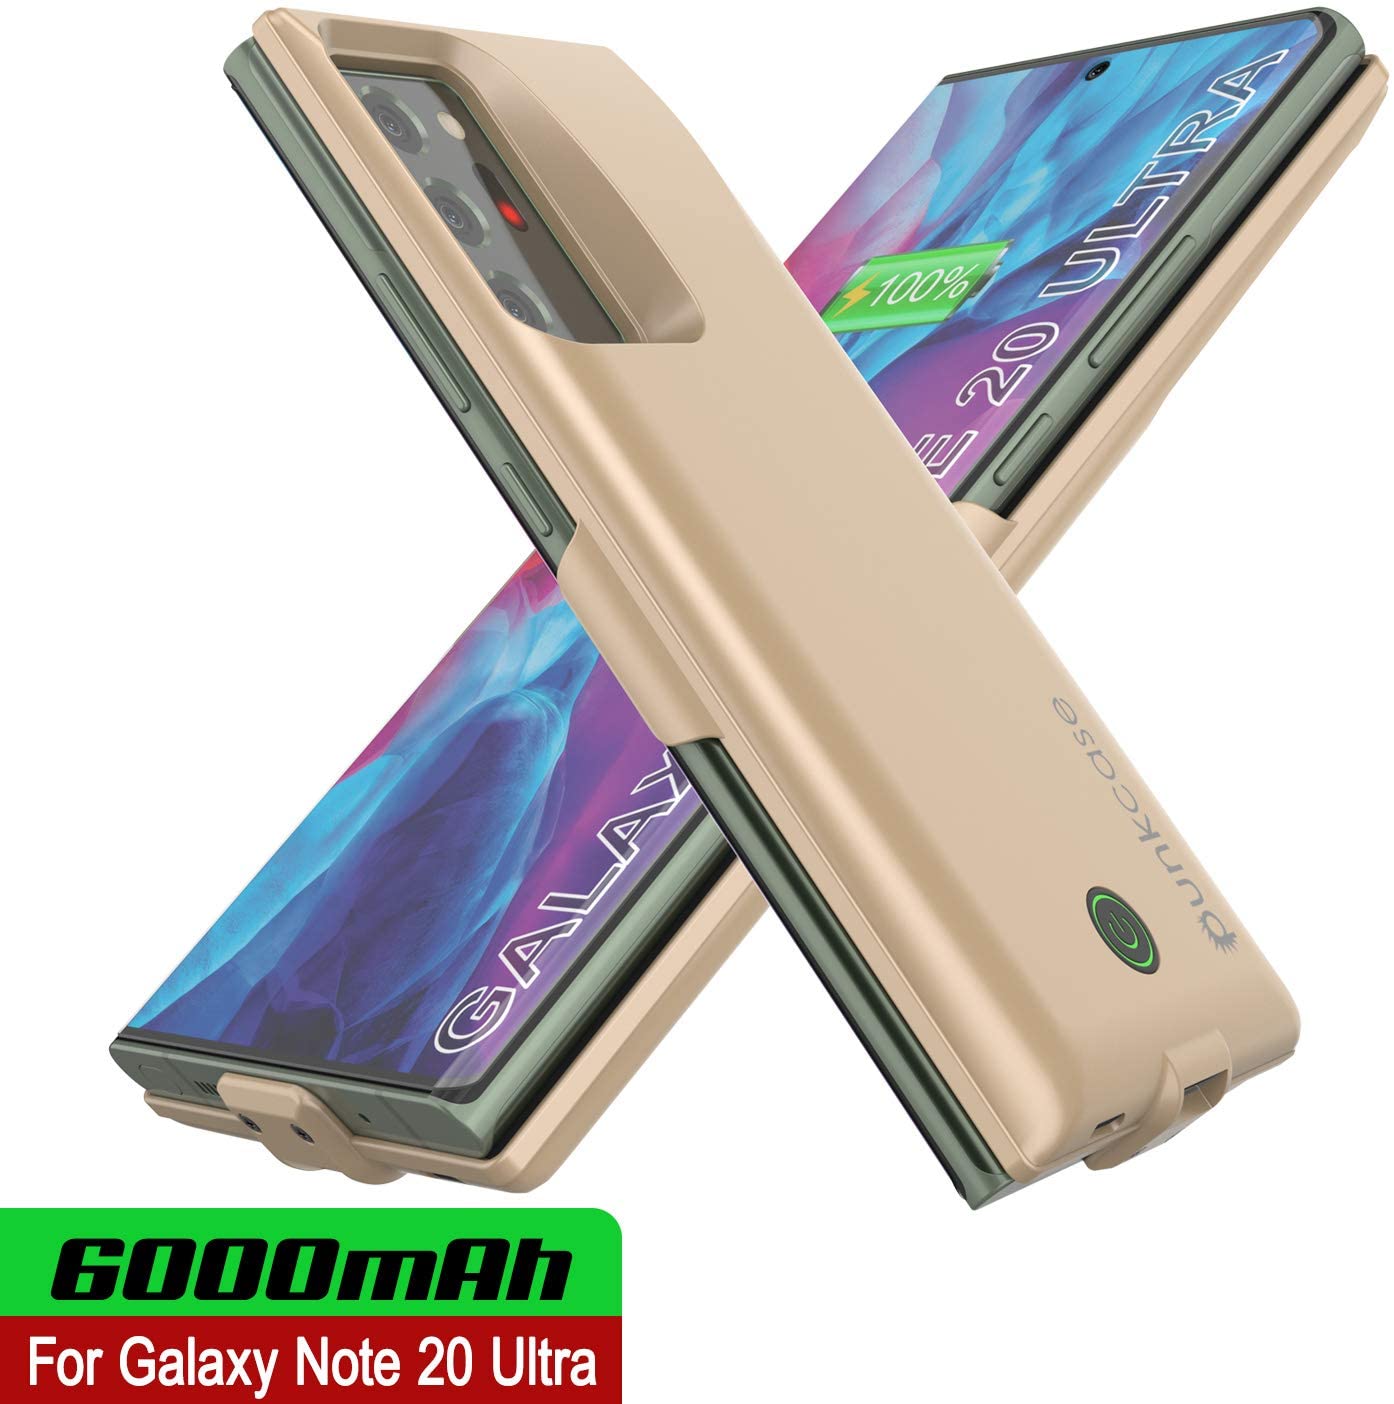 Galaxy Note 20 Ultra 6000mAH Battery Charger PunkJuice 2.0 Slim Case [Gold]